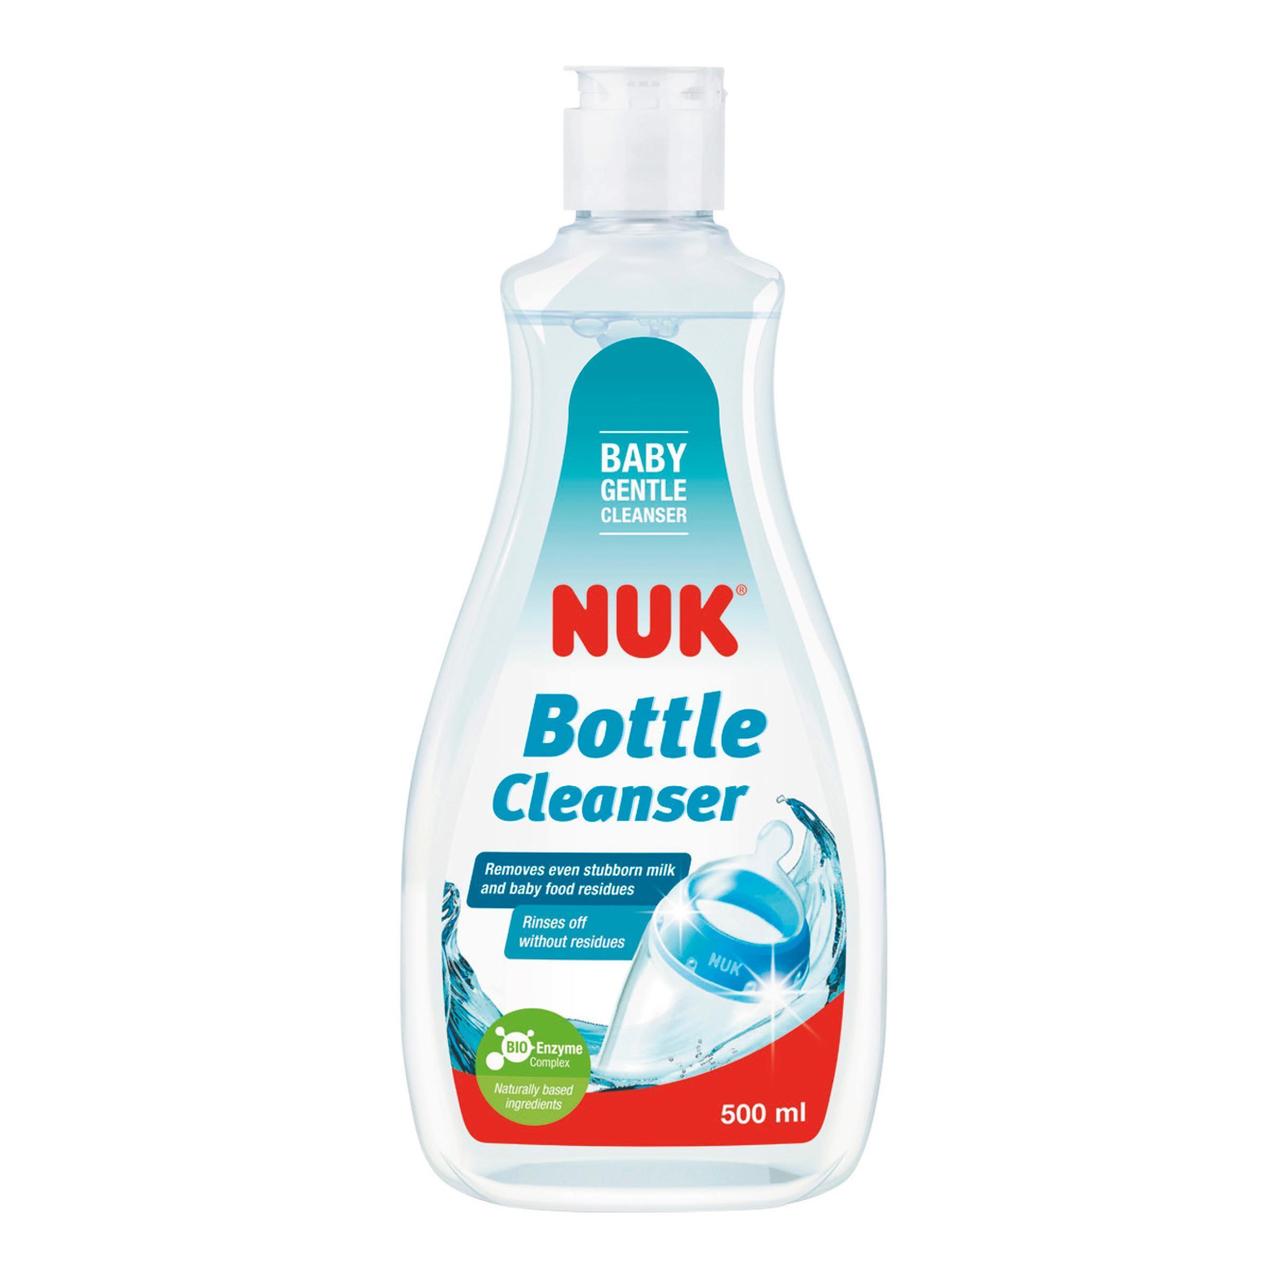 Nuk Liquid Cleanser For Baby Bottles and Utensils 500ml online in pakistan